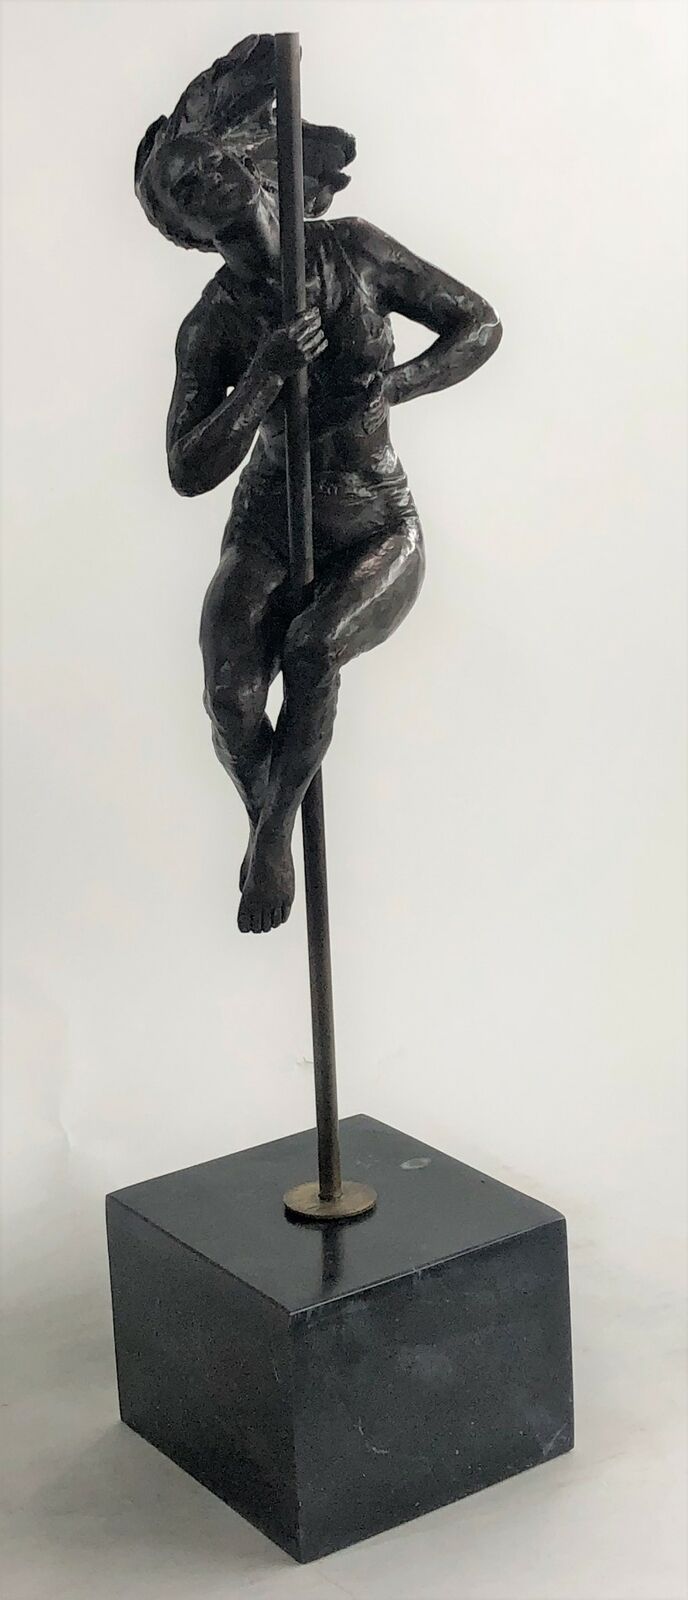 Huge Sale Hotcast Female Exhibitionist Bronze Sculpture Office Decoration Gift